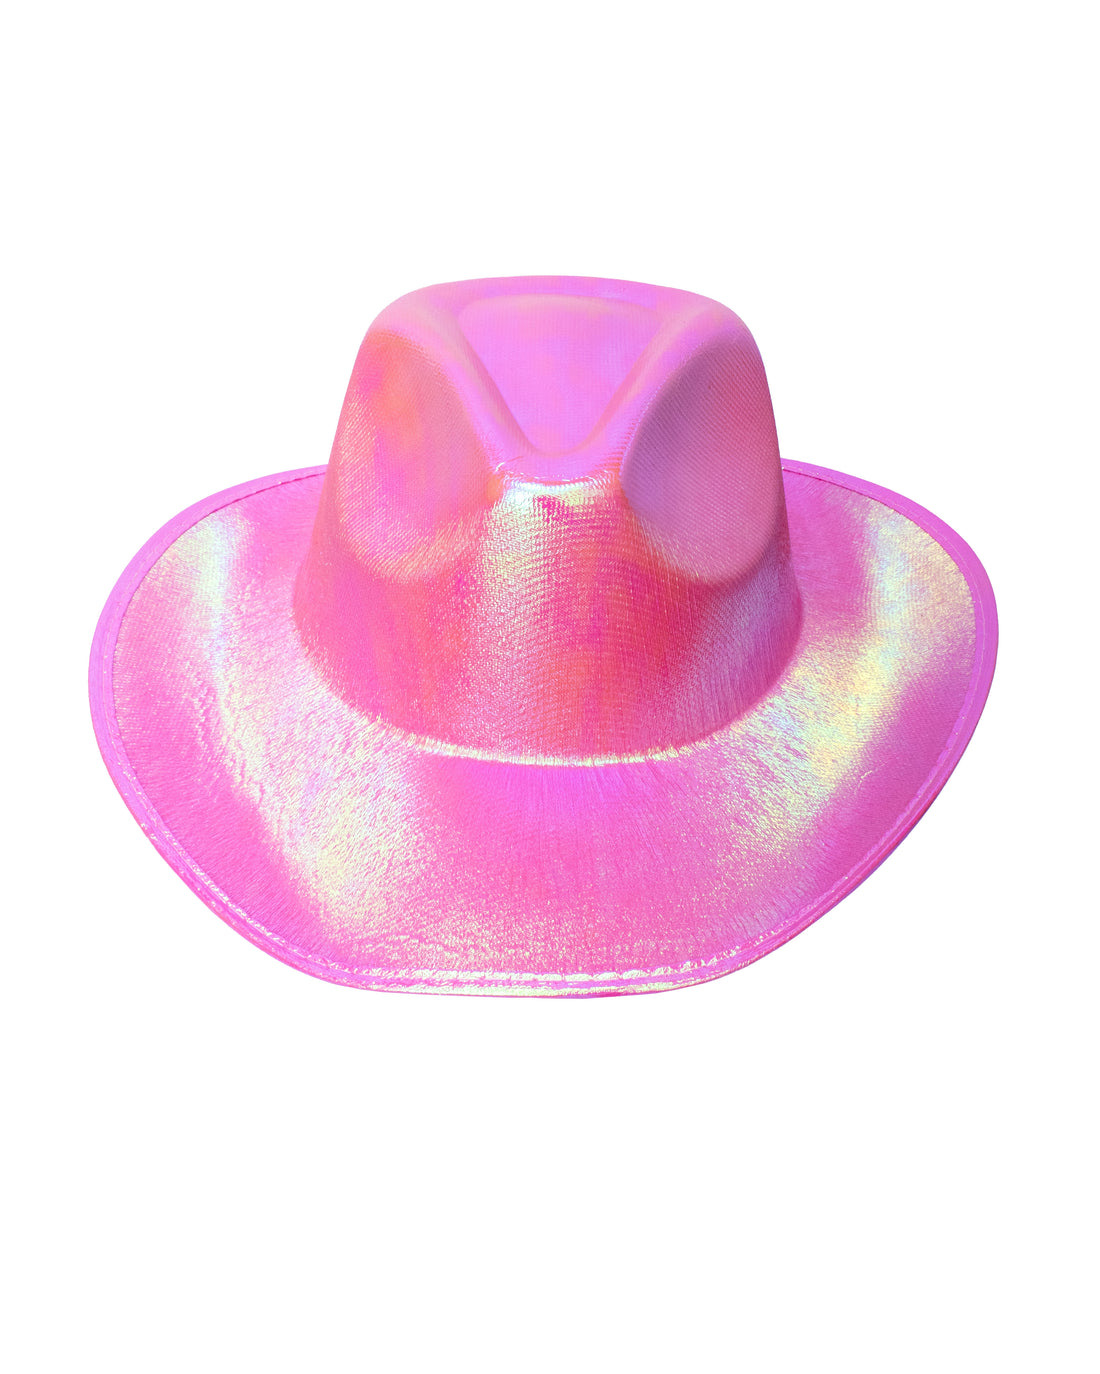 Pink Iridescent Cowboy Hat - Lunautics Cowboy Hat